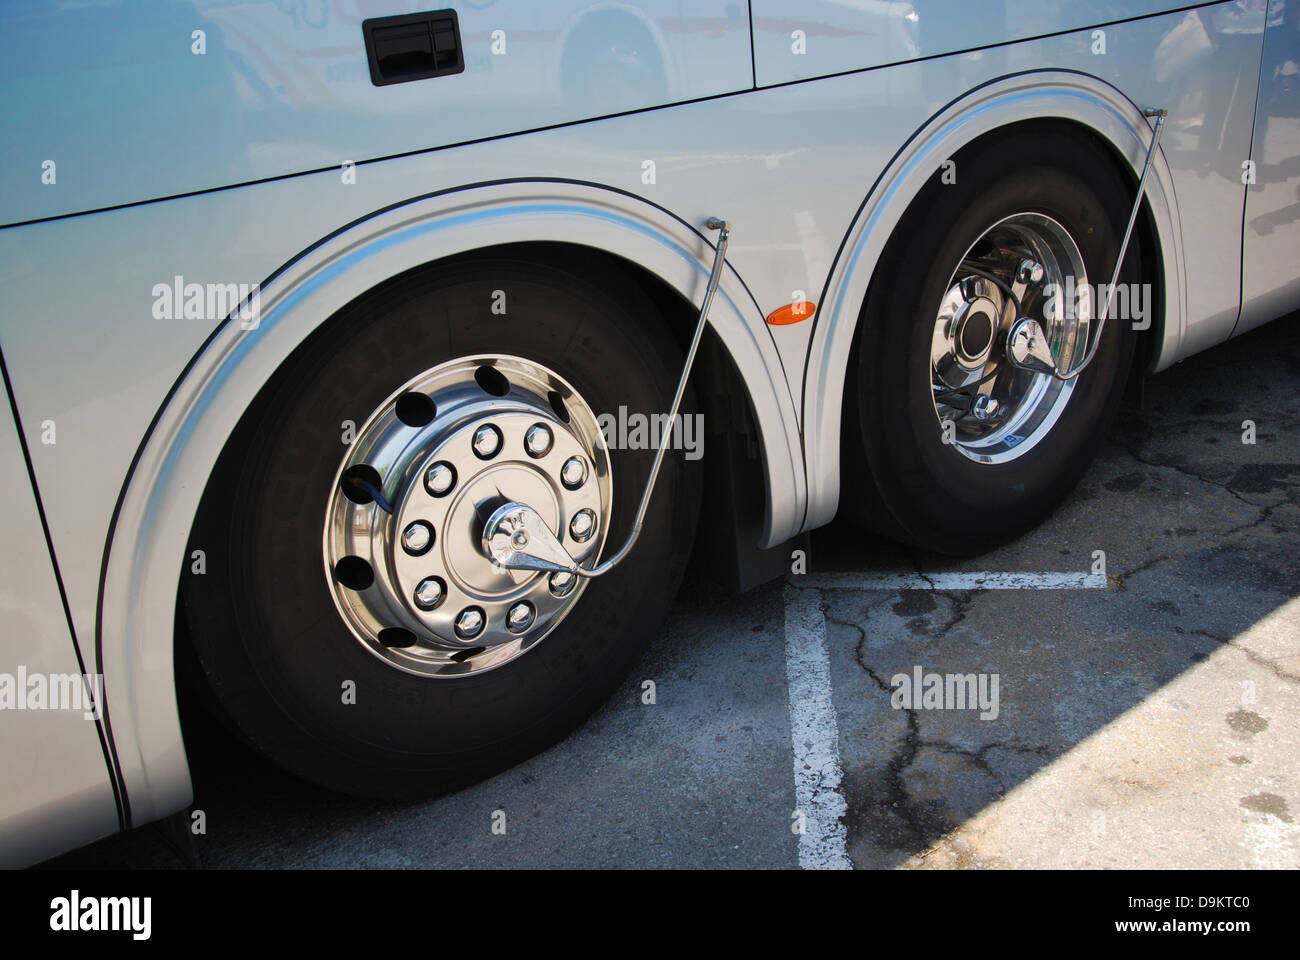 Bus-Räder mit Central Tire Inflation System (CTIS Stockfotografie - Alamy